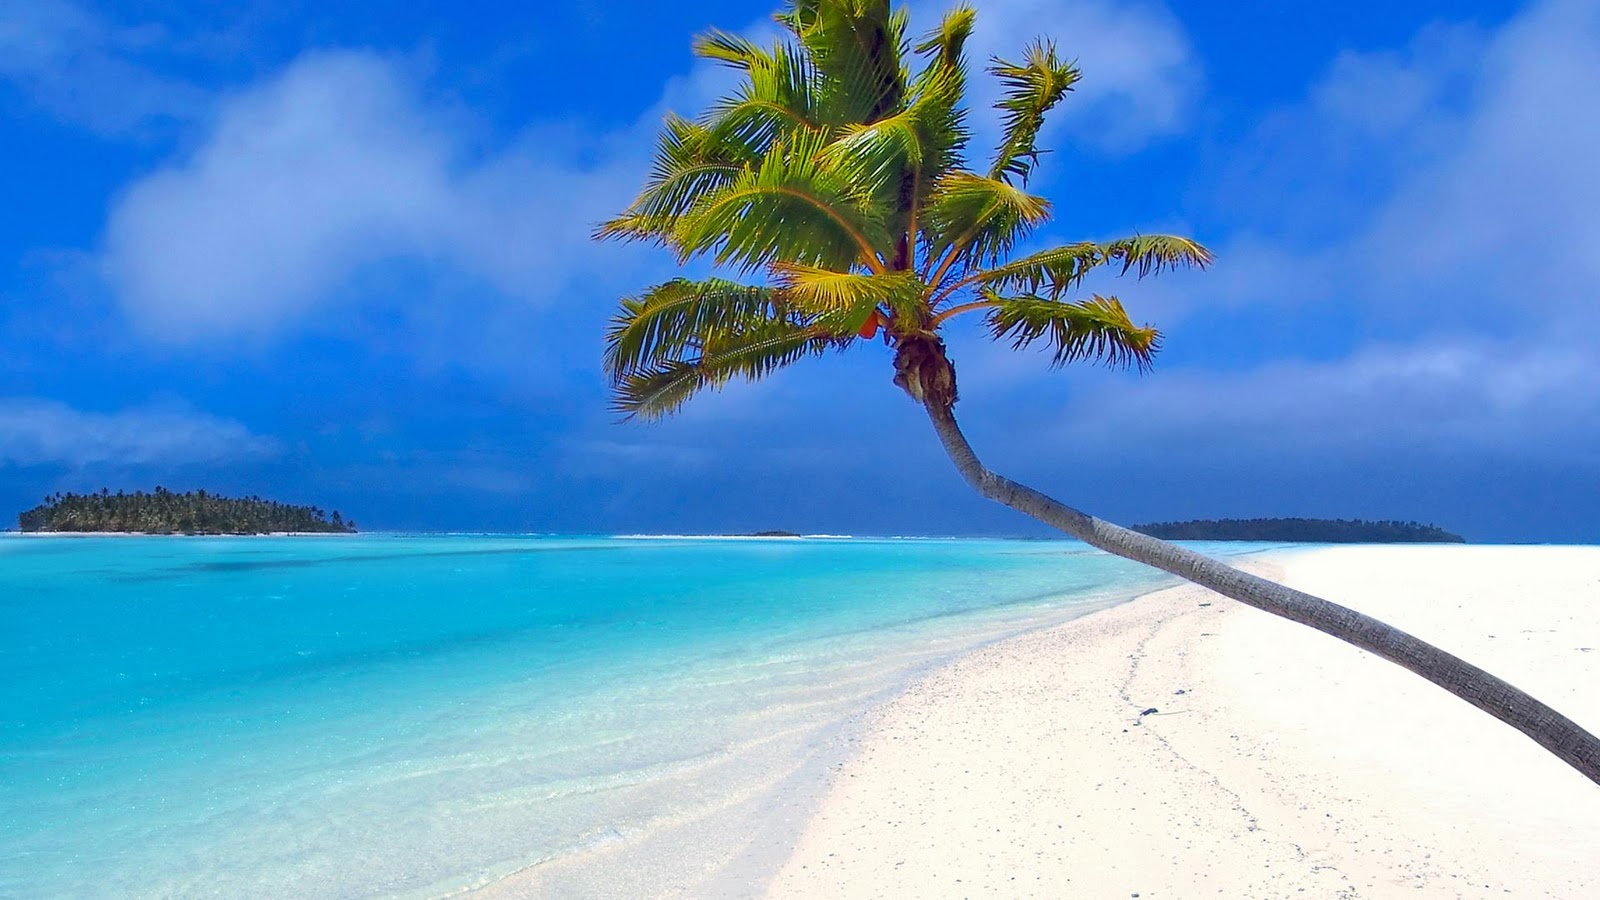 imágenes del océano para fondo de pantalla,cielo,naturaleza,árbol,paisaje natural,caribe